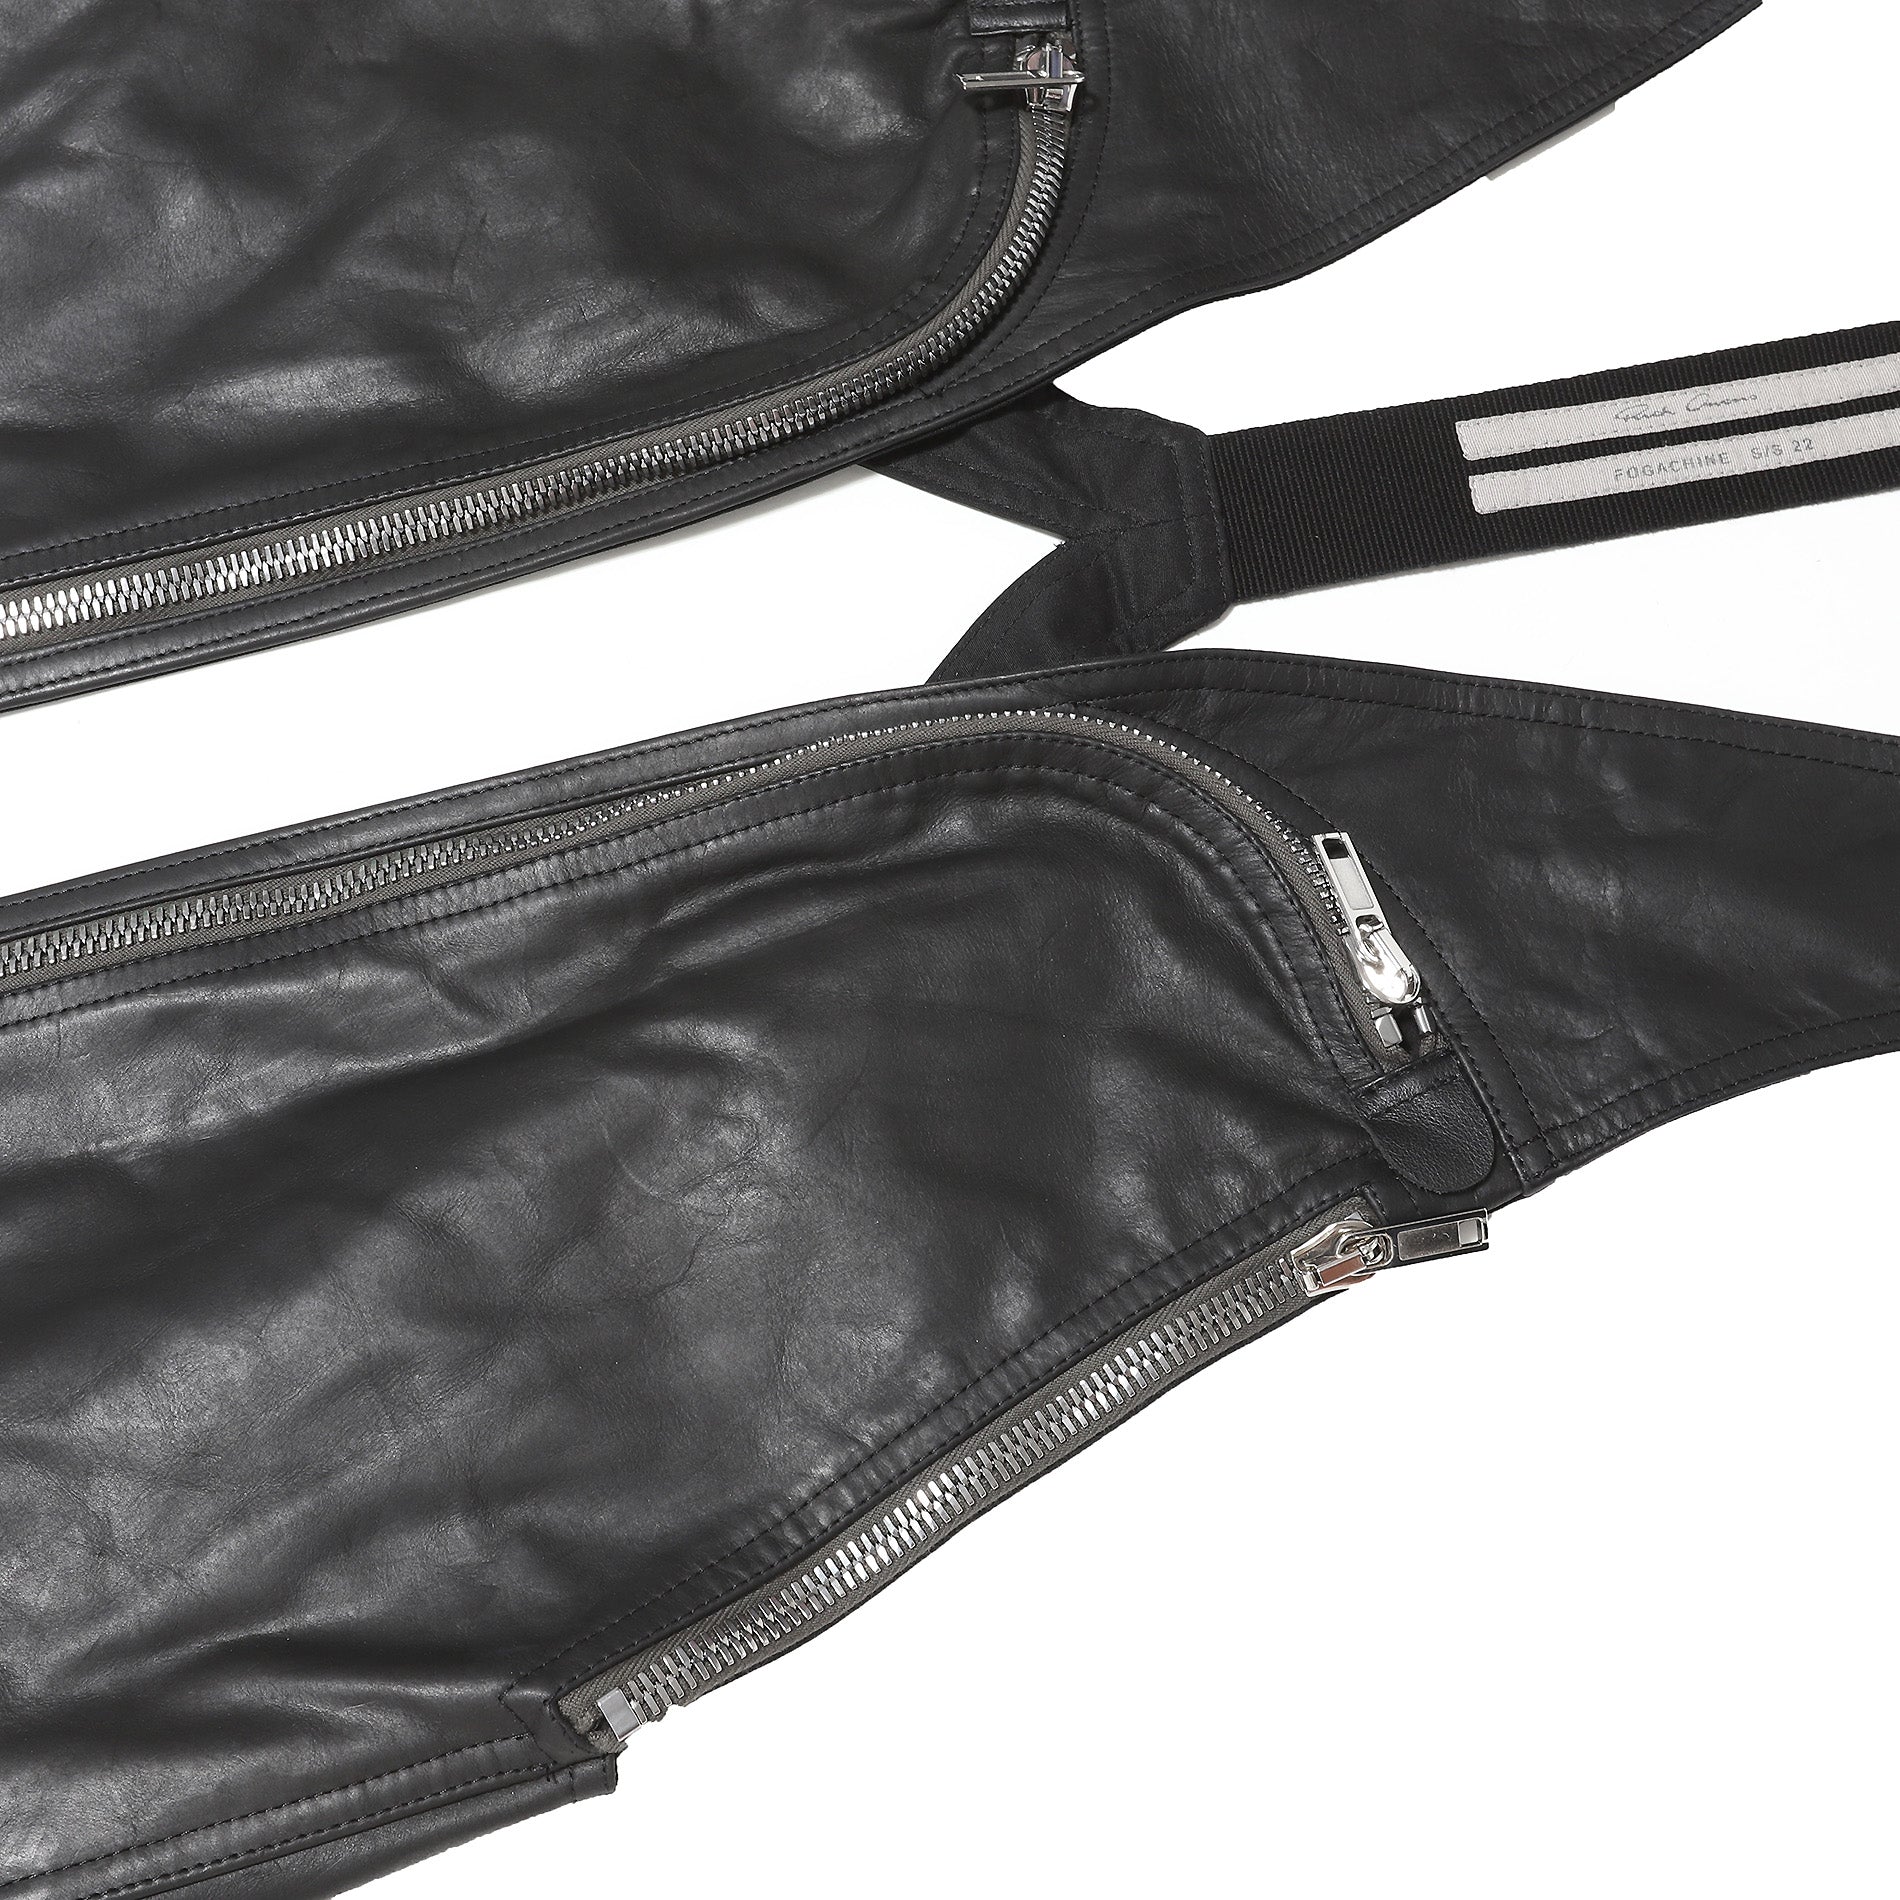 Rick Owens SS22 Fogachine Bauhaus Leather Holster Cargo Vest